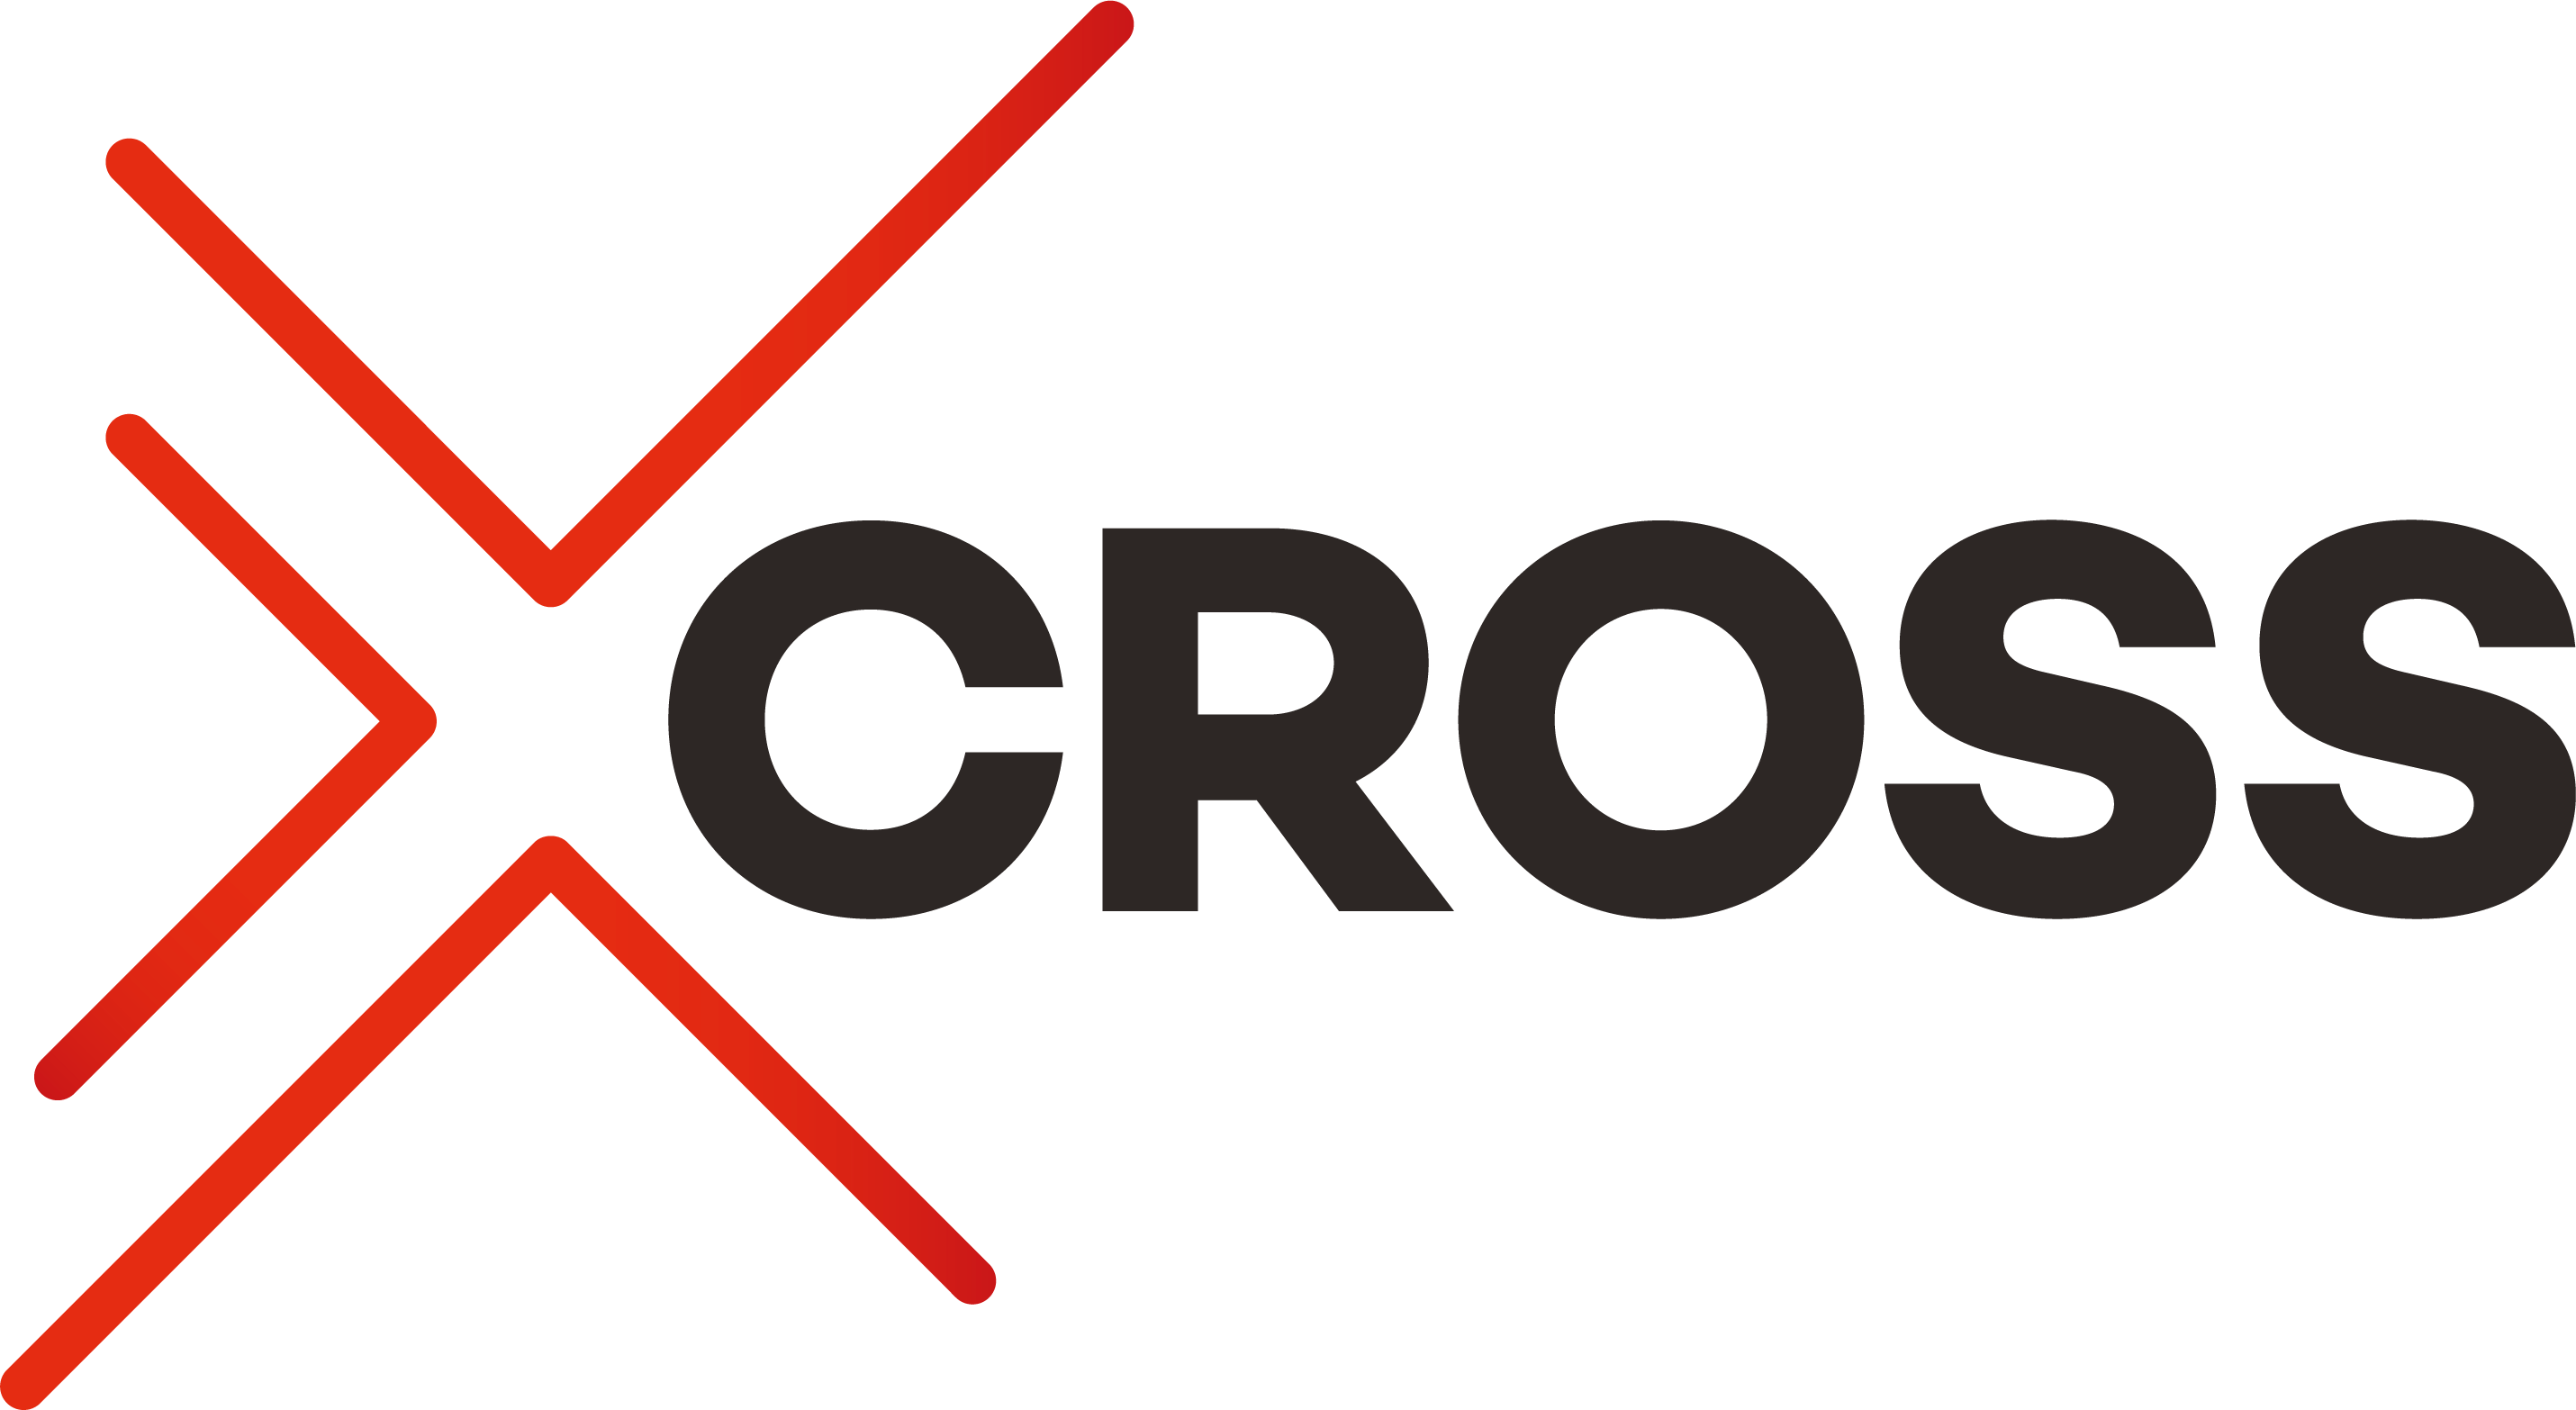 Cross_logo_2022